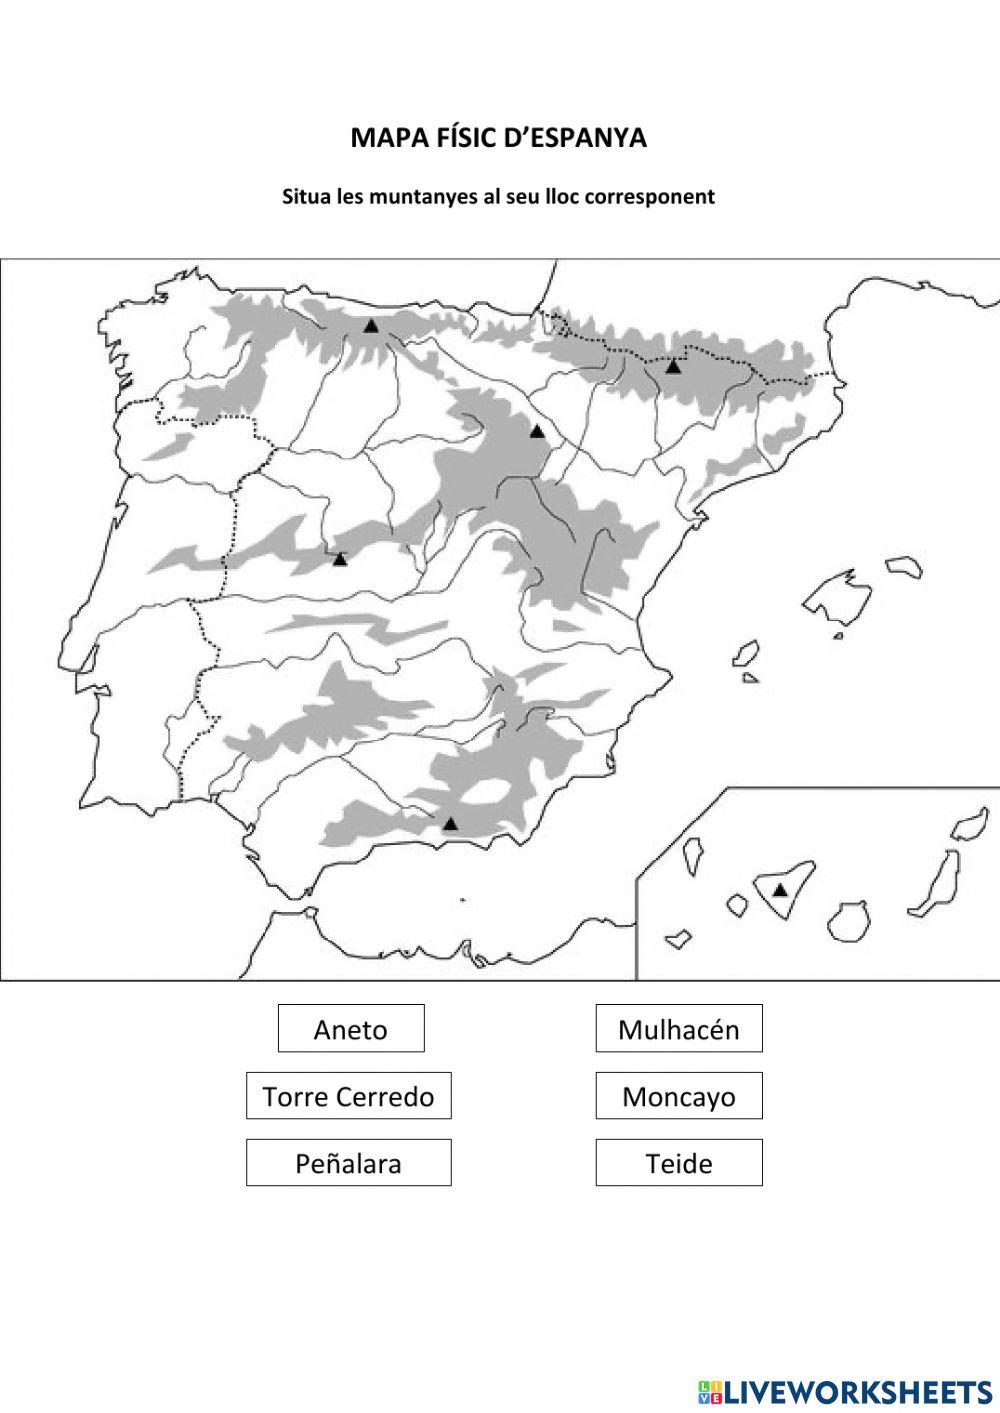 Mapa fisic d'Espanya.